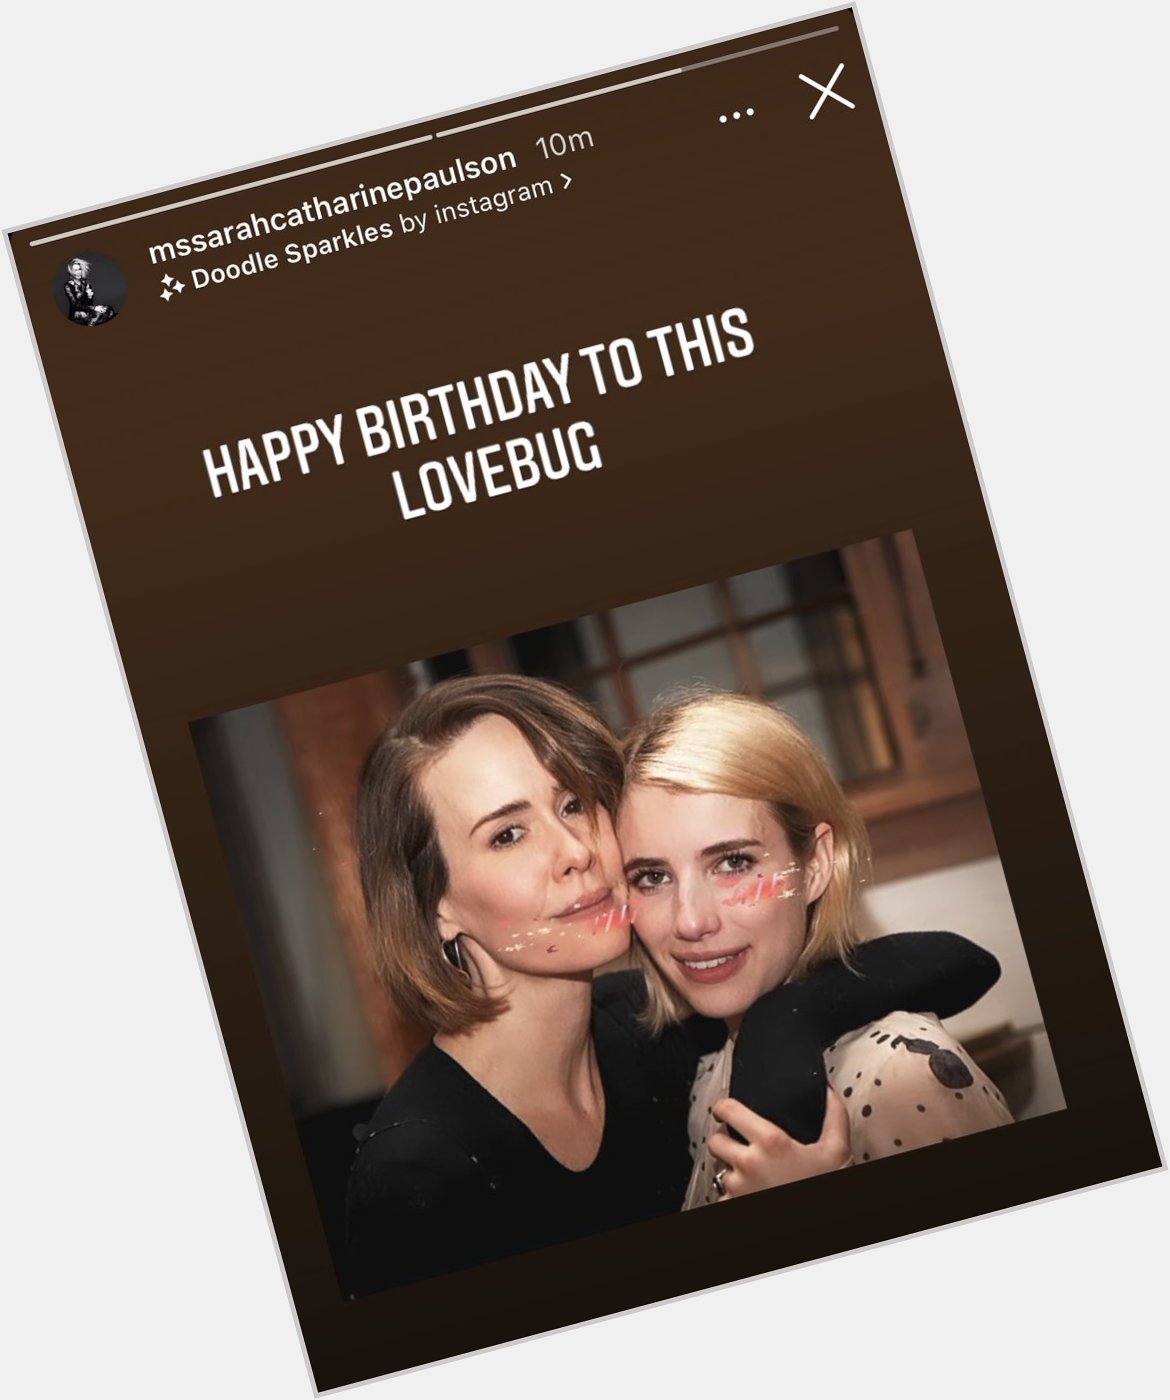 Sarah paulson greeting emma roberts a happy birthday via instagram stories<3 